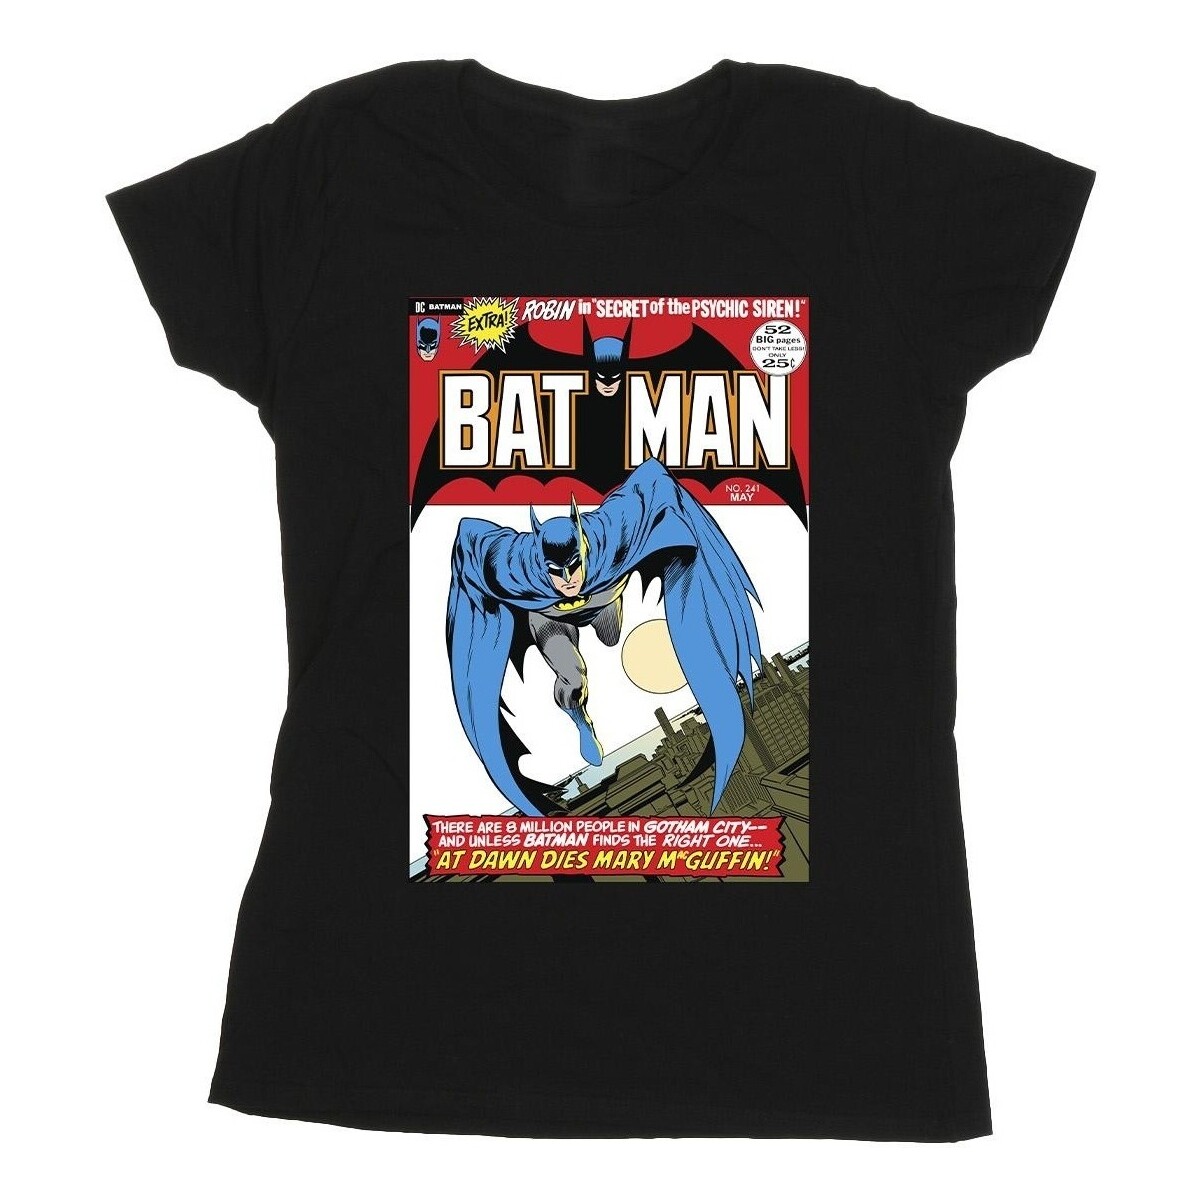 Vêtements Femme T-shirts manches longues Dc Comics Running Batman Cover Noir